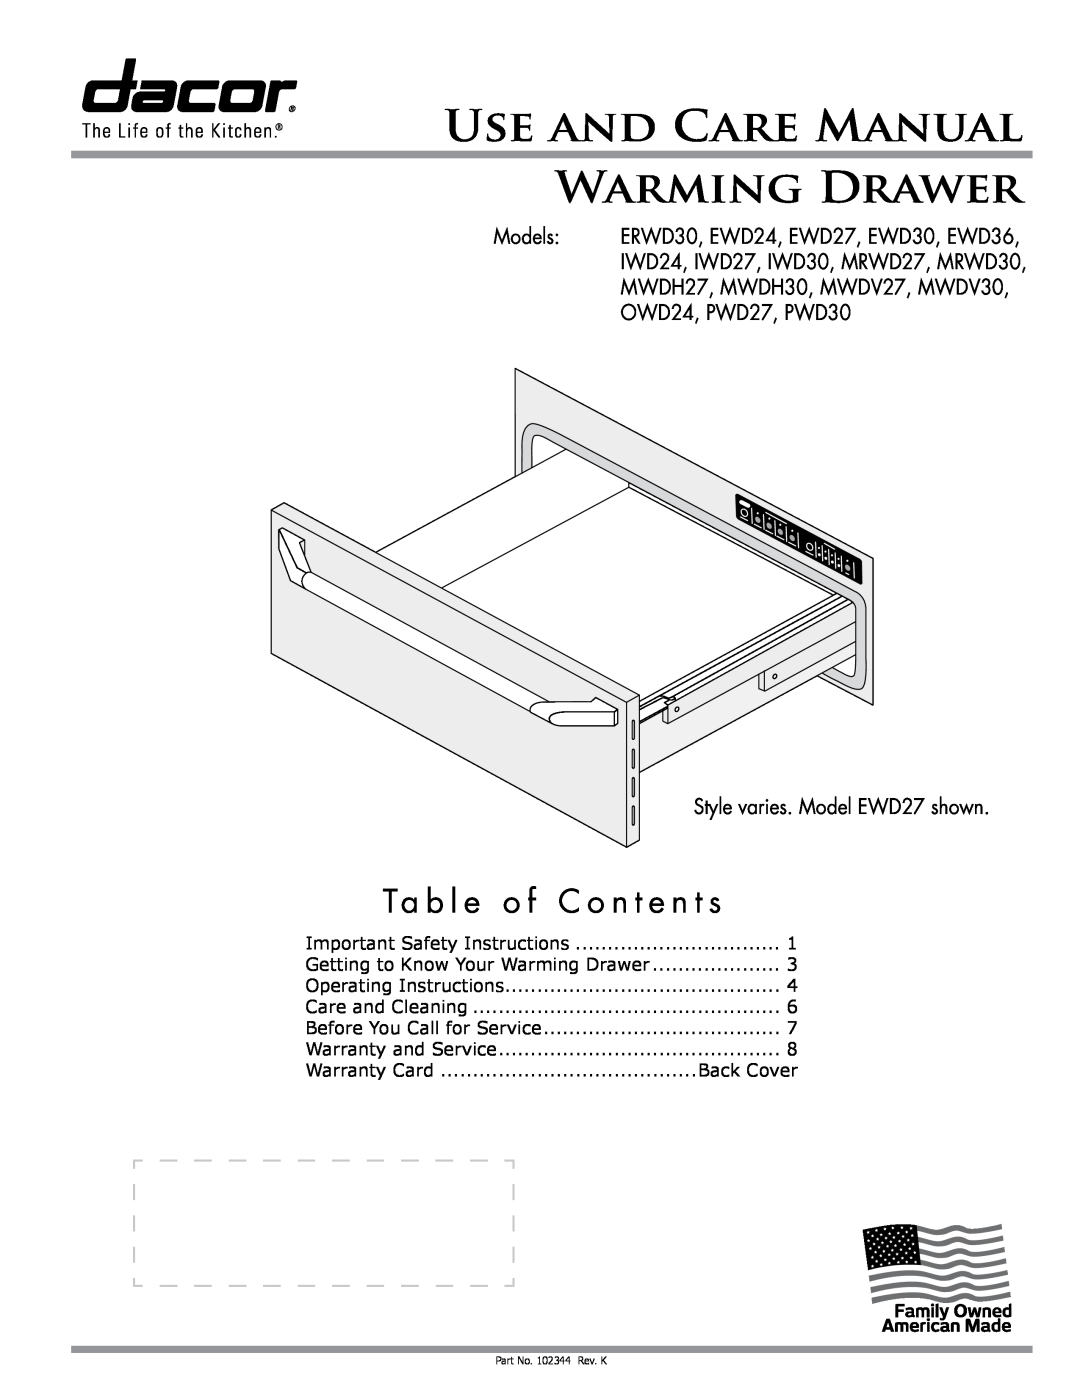 Dacor ERWD30 manual Use And Care Manual Warming Drawer, Models, MWDH27, MWDH30, MWDV27, MWDV30, OWD24, PWD27, PWD30 